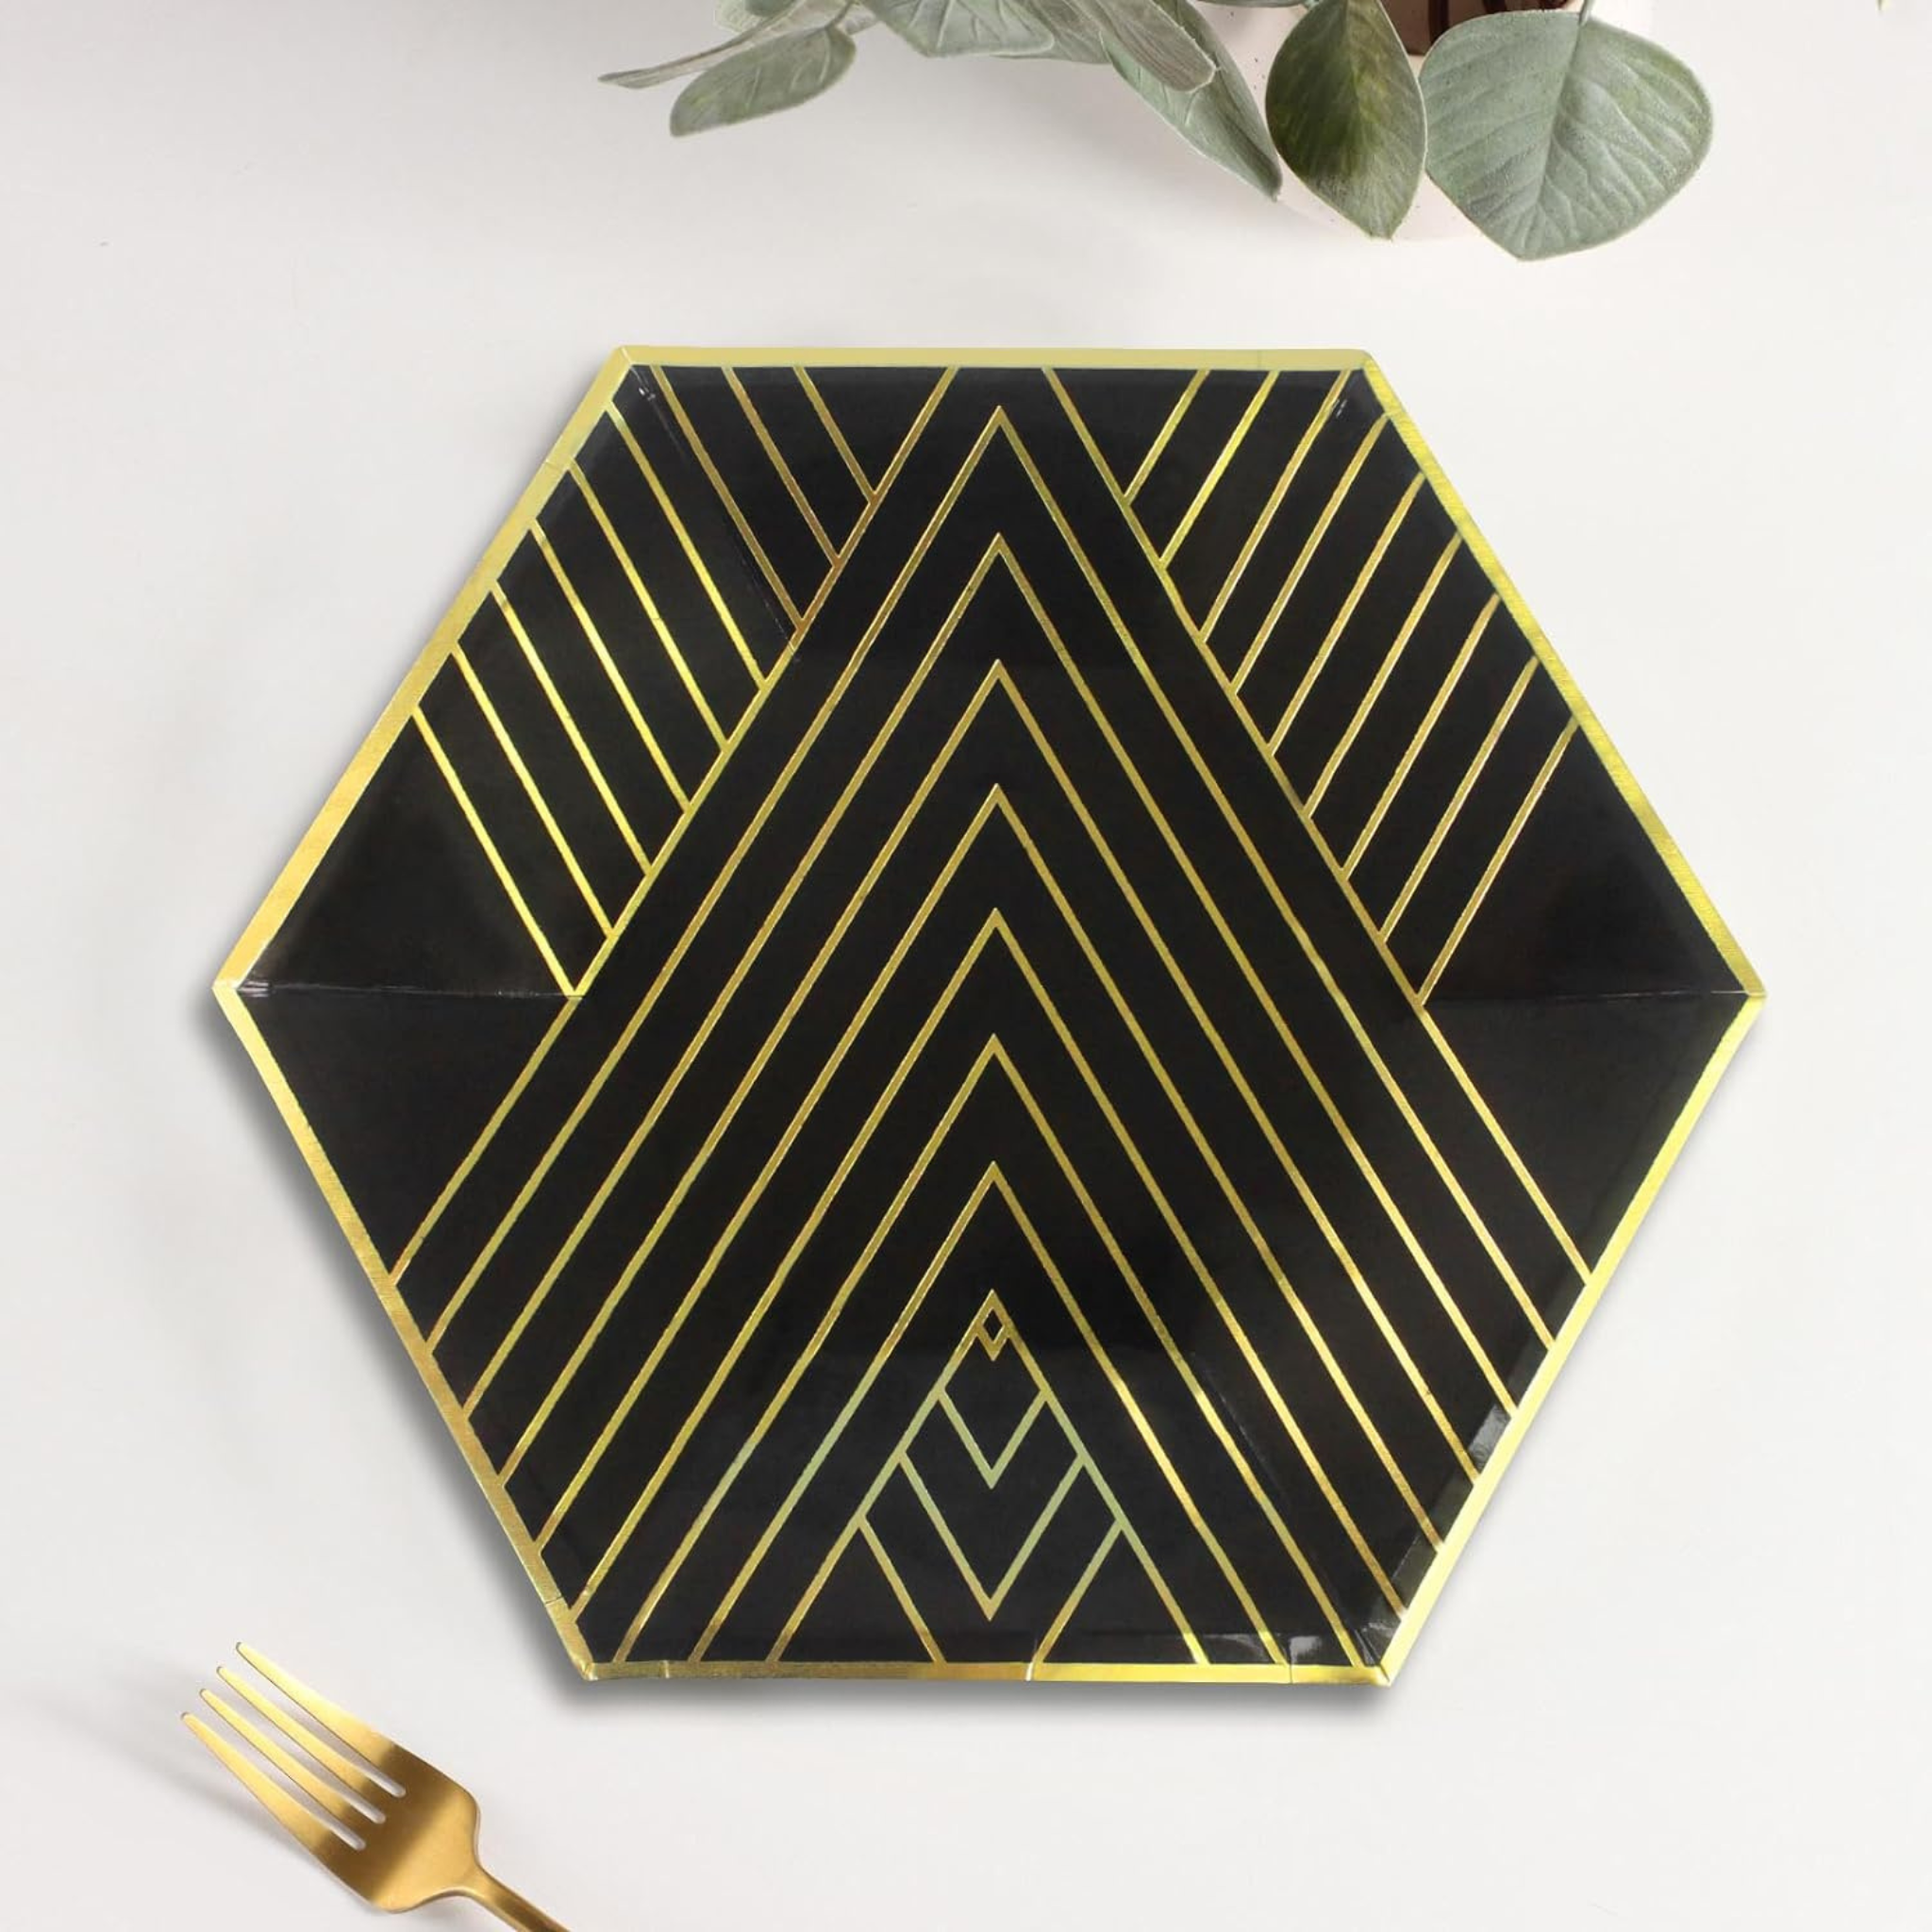 Black with Gold Theme Party Hexagon Plates Set